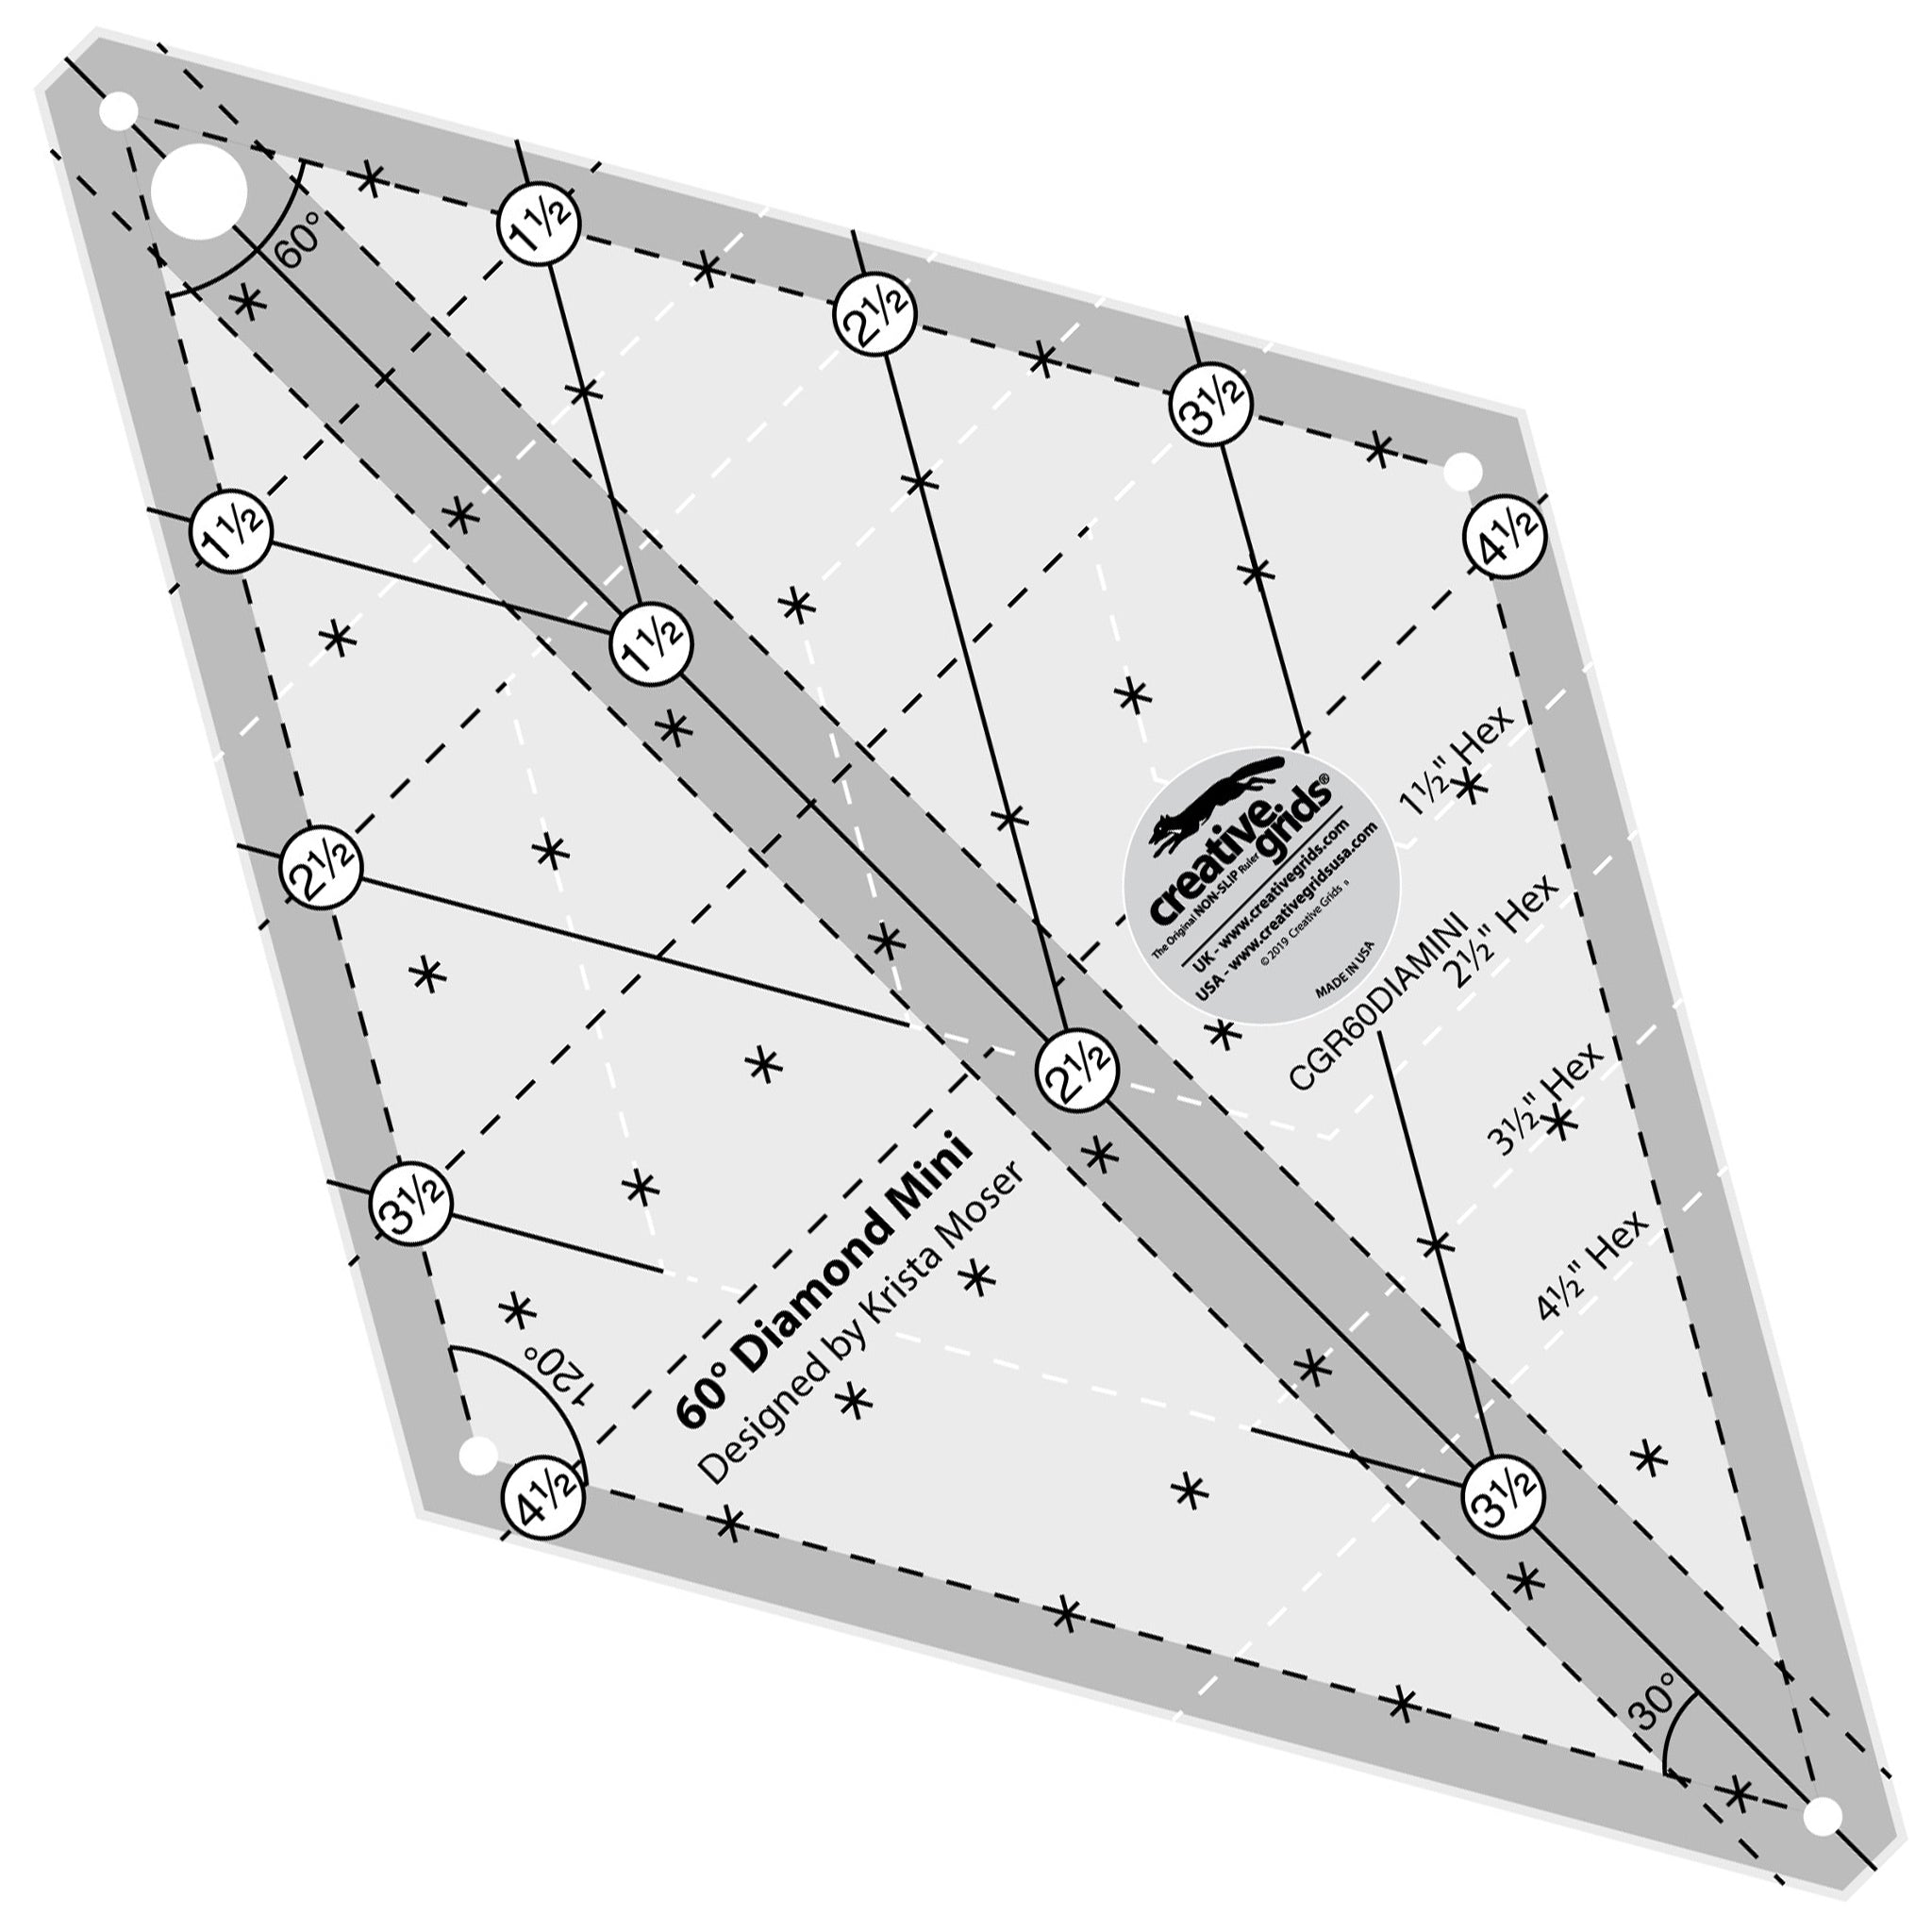 Creative Grids 60 Degree Mini Diamond Ruler (CGR60DIAMINI)